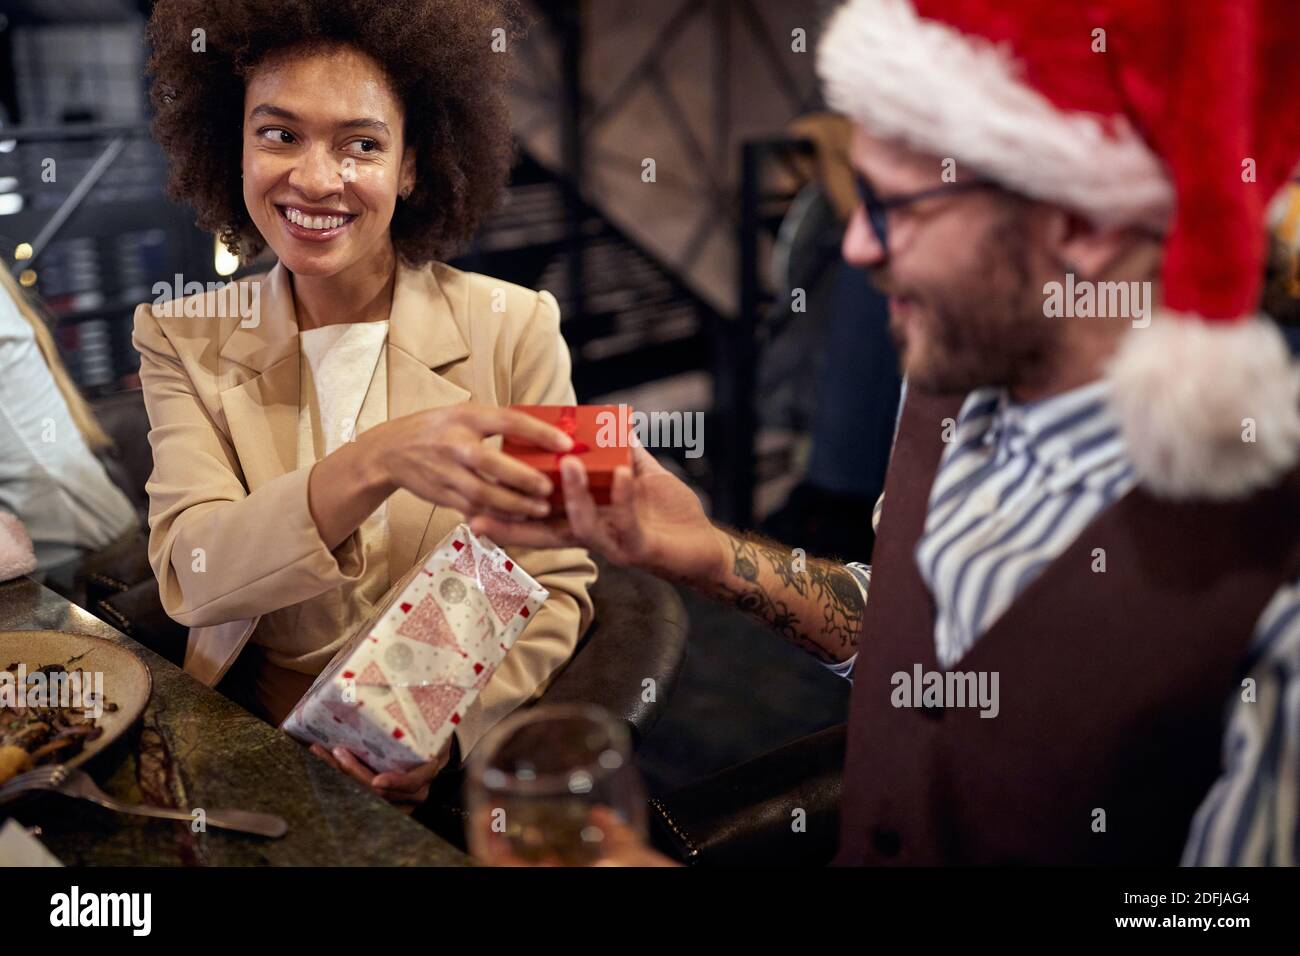 multiethnic couple having dinner, exchanging presents. new year celebration concept Stock Photo